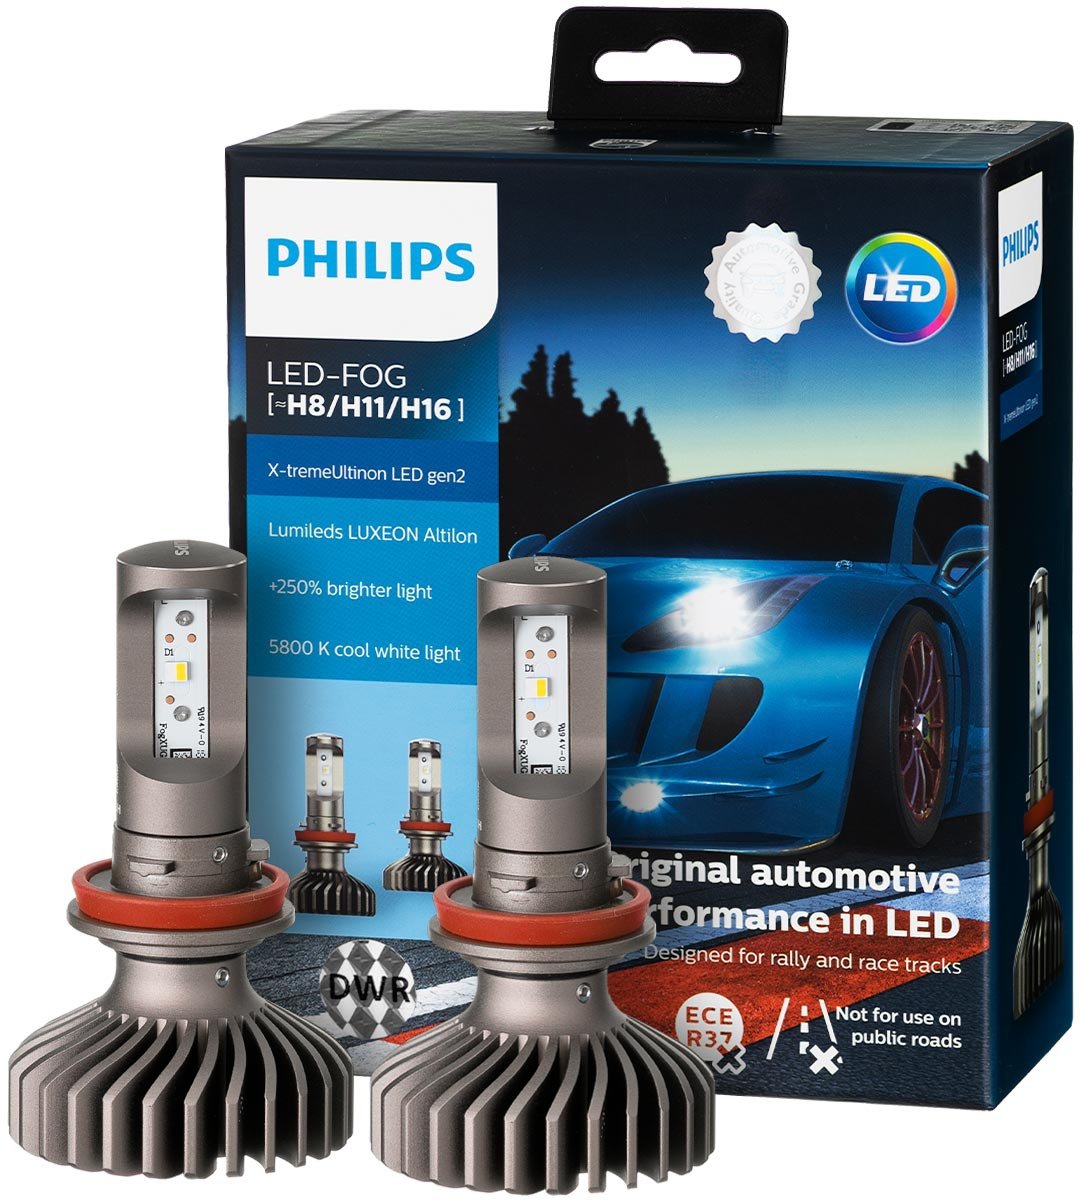 Филипс 11. Philips led Fog h8/h11/h16. Лампа h8 led Philips. Лампочки Philips led Fog h8/h11/h16. Philips h8/h11/h16 Ultinon Essential.